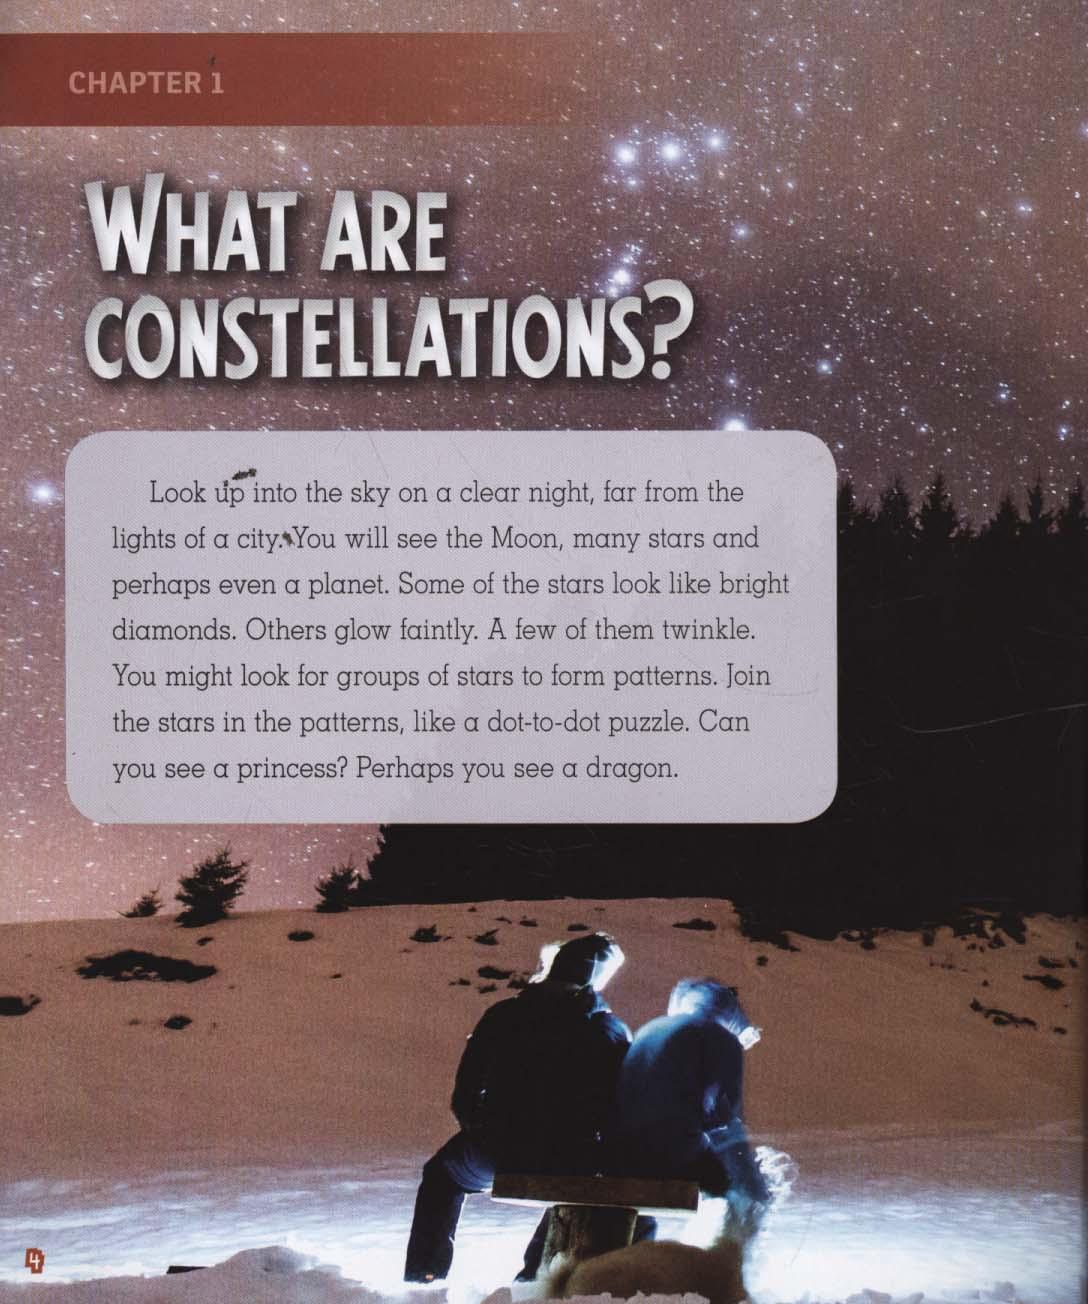 Exploring Constellations